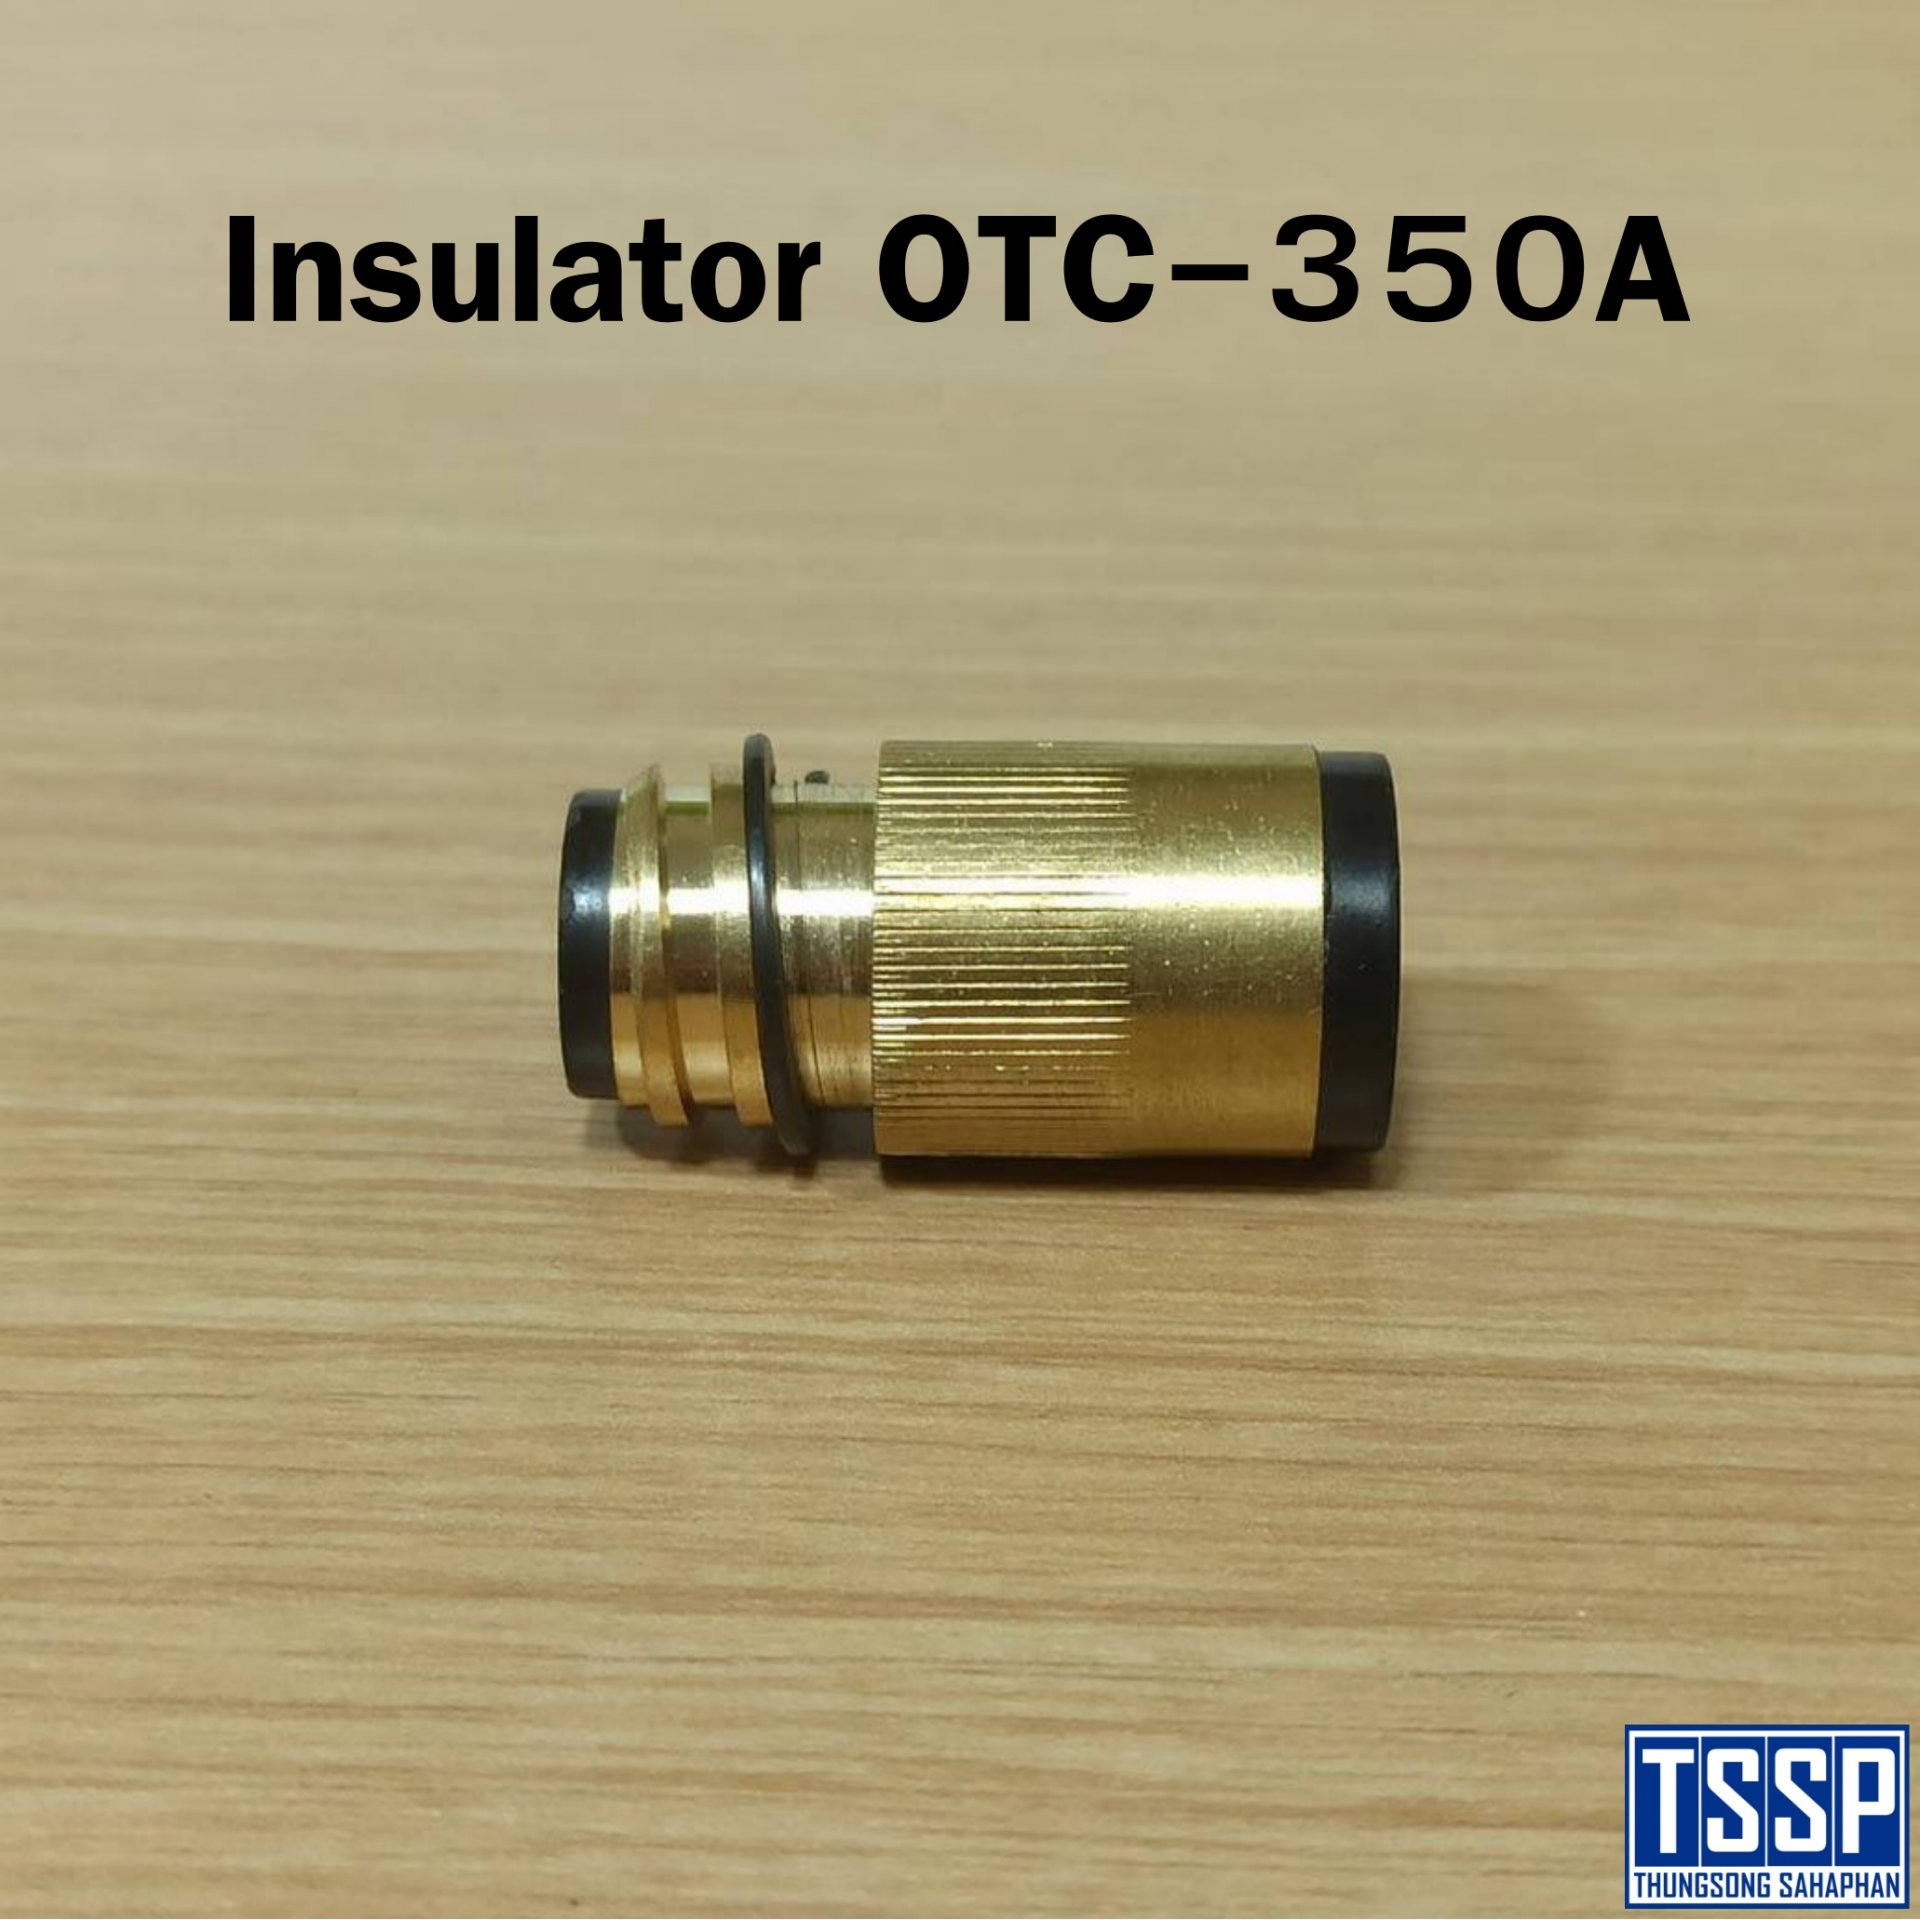 Insulator OTC-350A